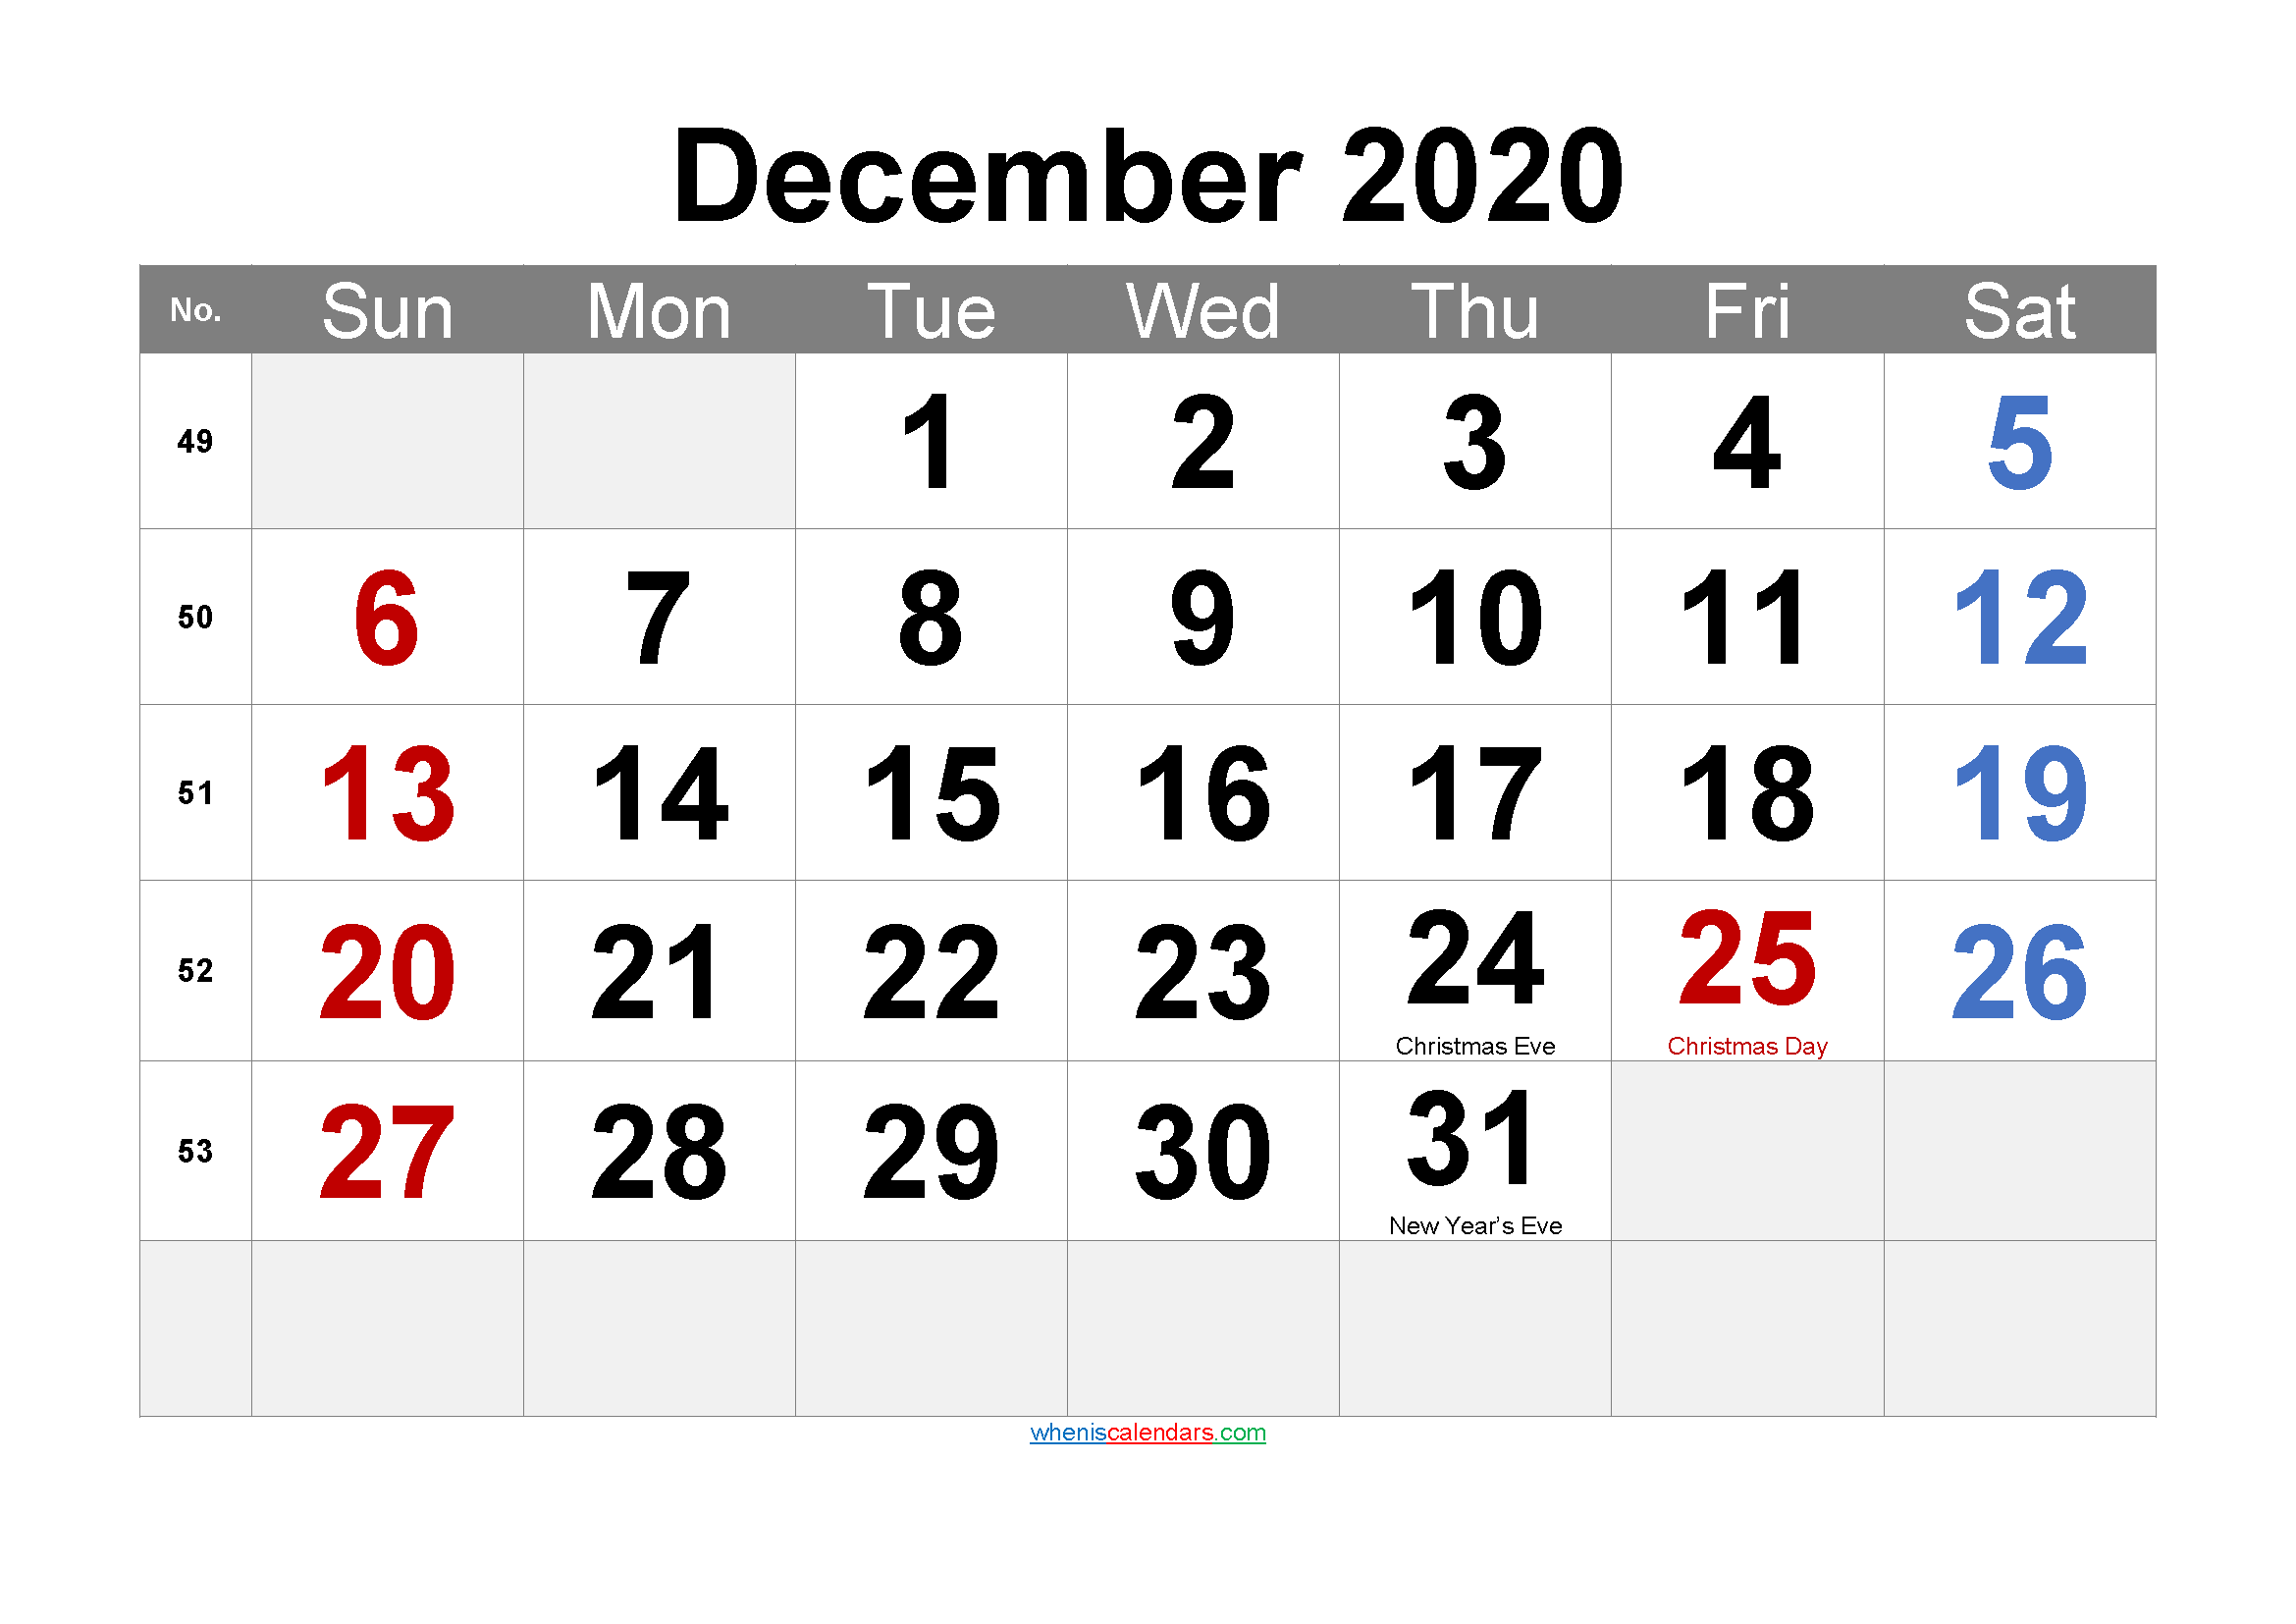 DECEMBER 2020 Printable Calendar with Holidays